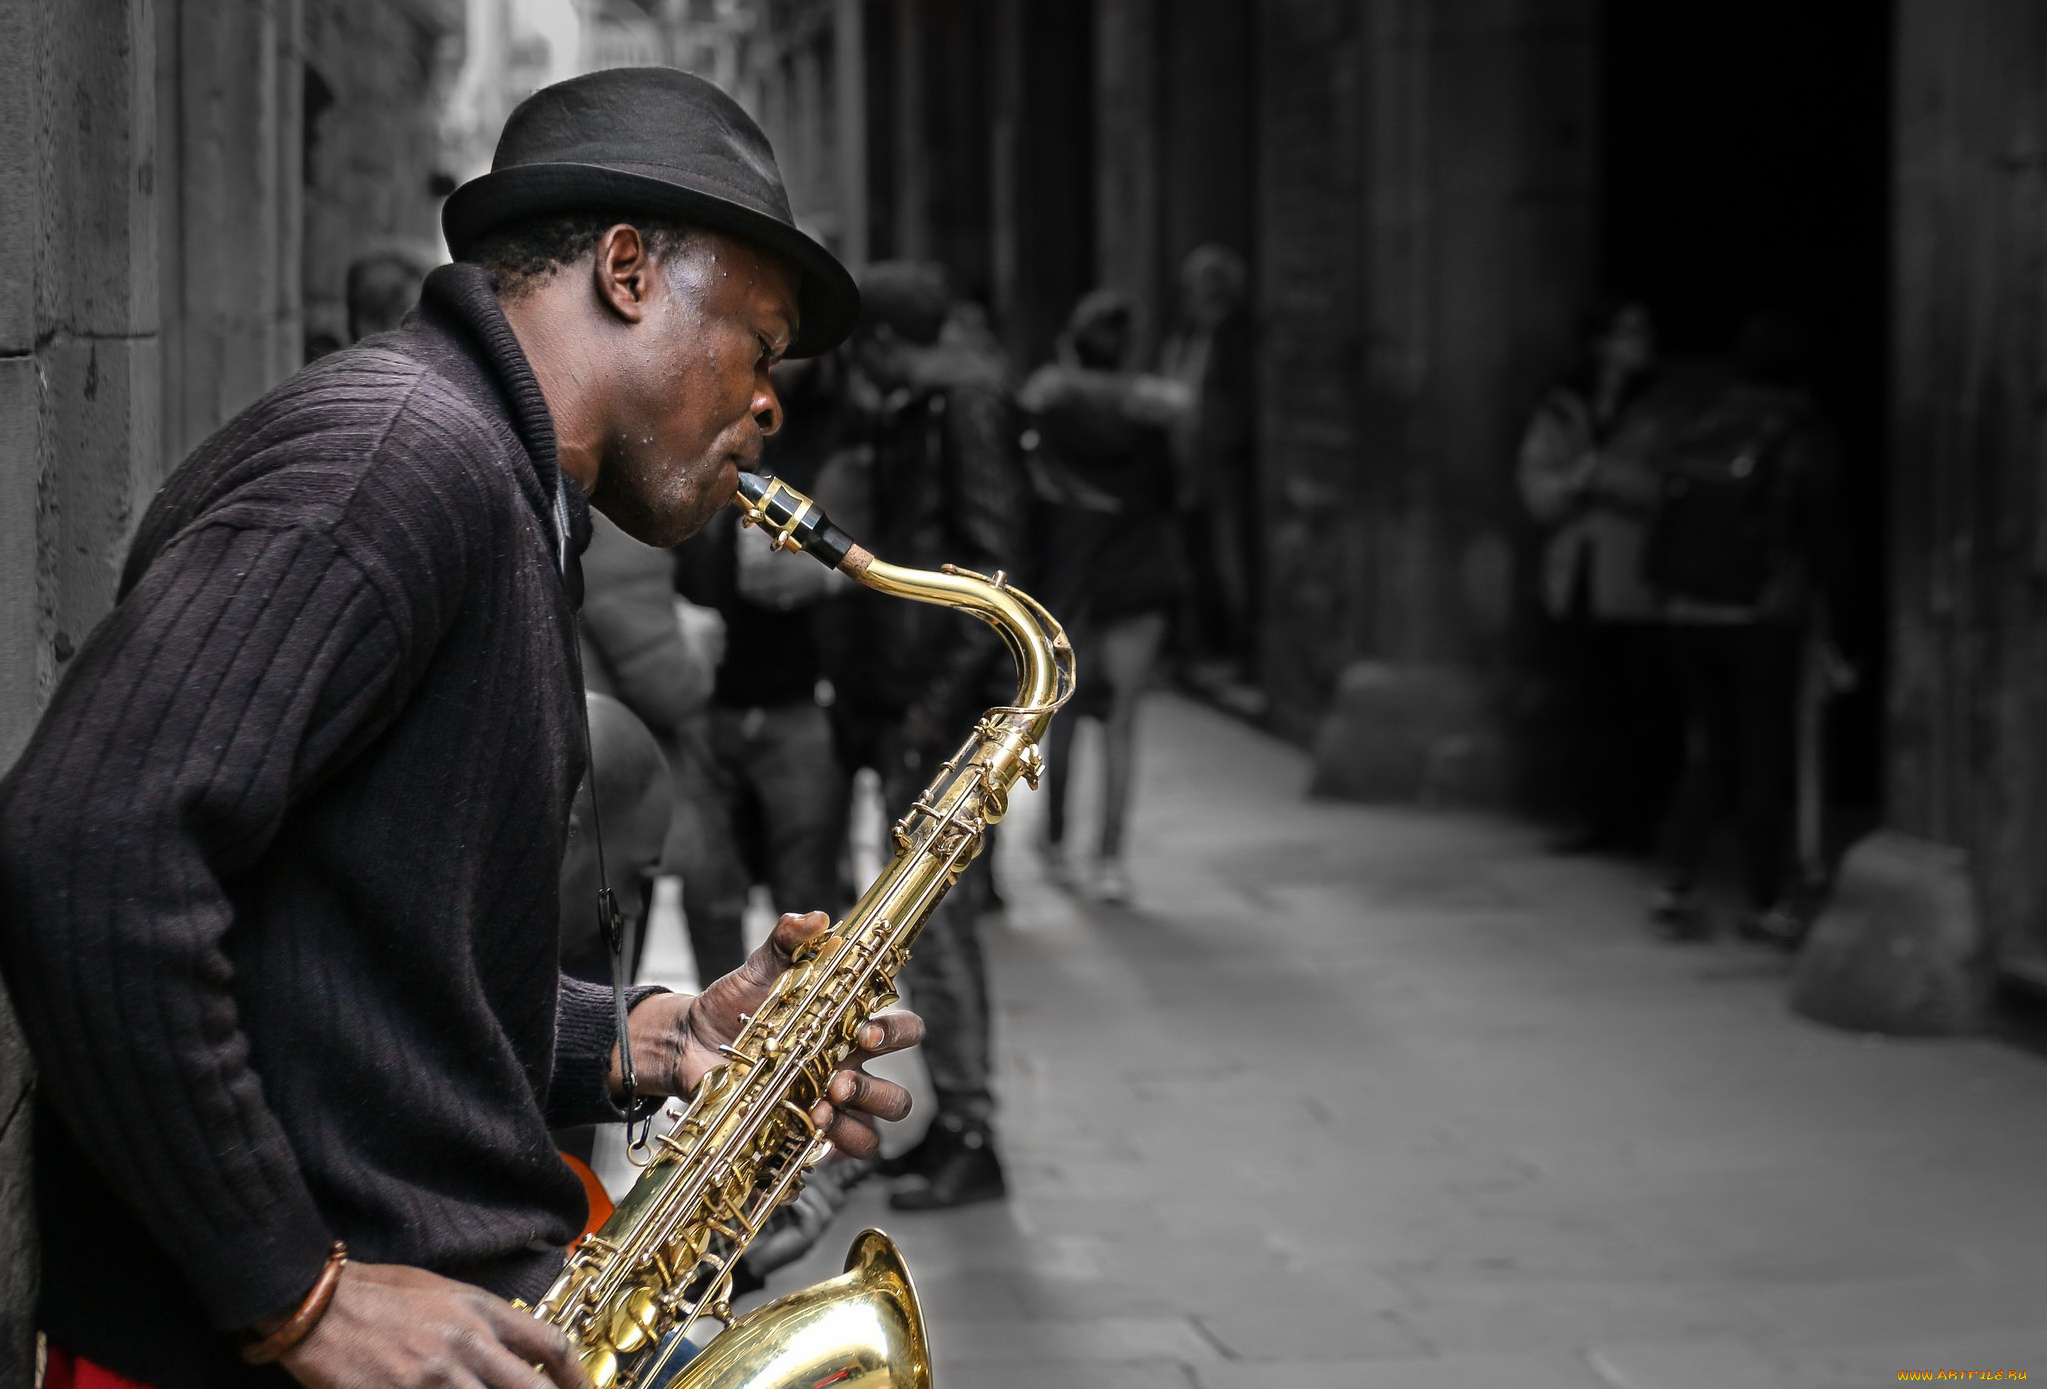 музыка, -другое, саксофон, мужчина, шляпа, музыкант, улица